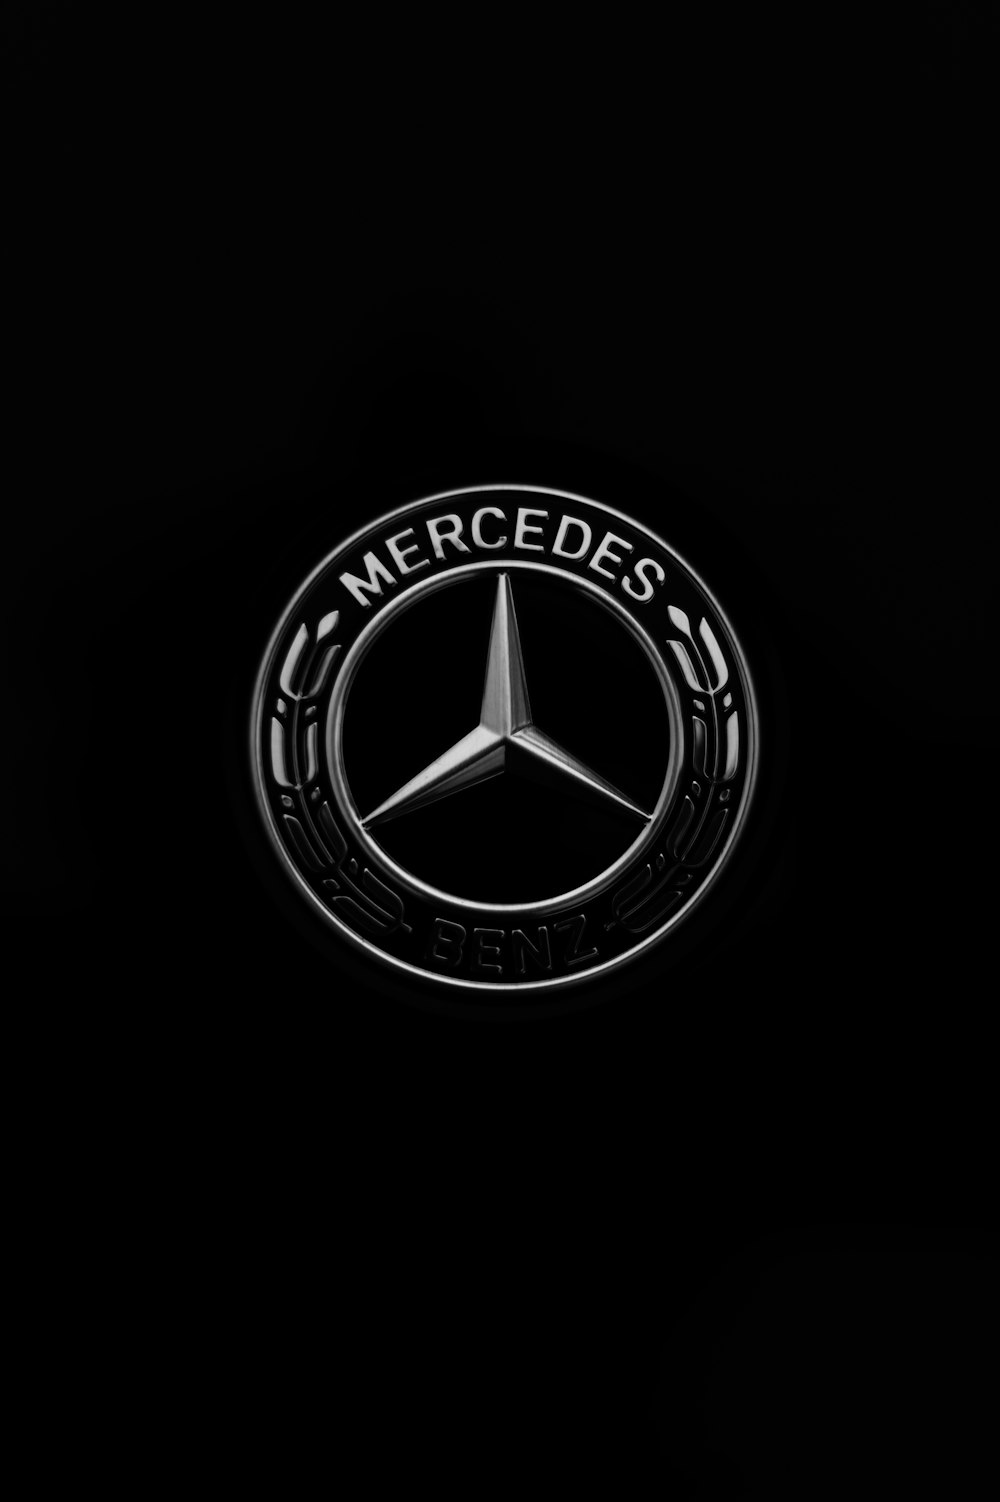 a mercedes logo on a black background photo – Free Symbol Image on Unsplash